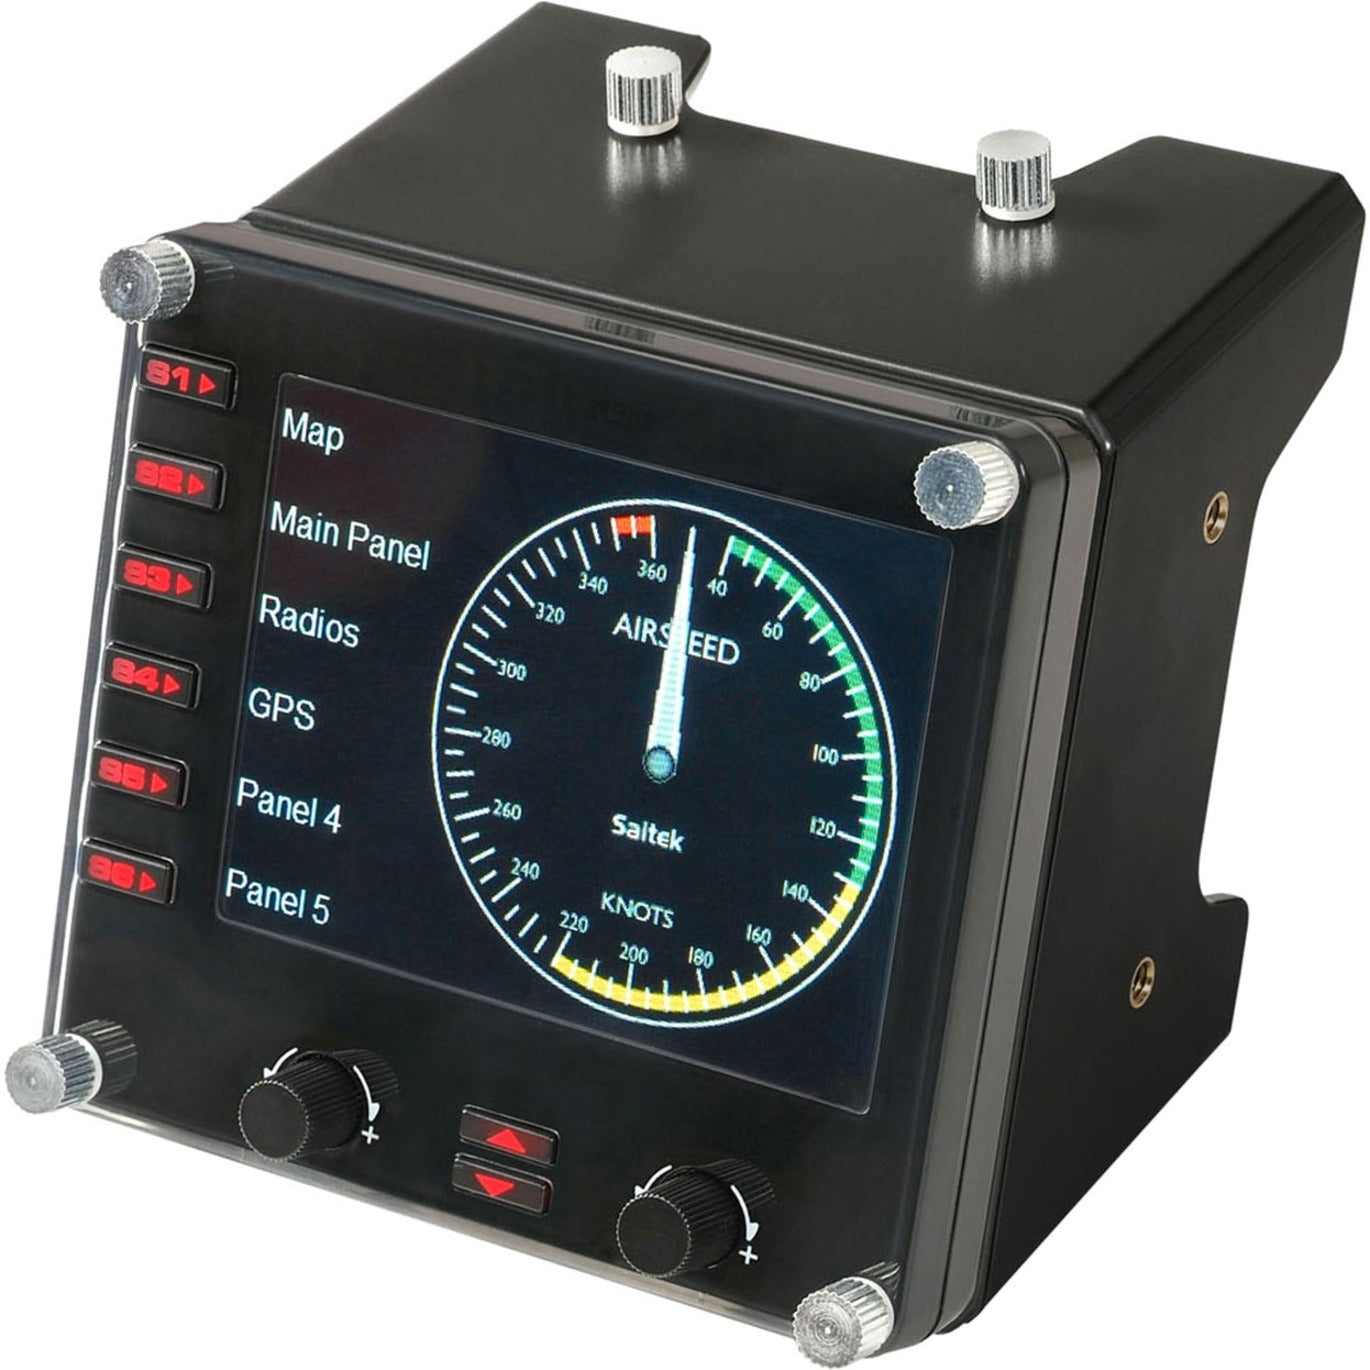 Saitek 945-000027 Pro Flight Instrument Panel, USB Gaming Control Panel